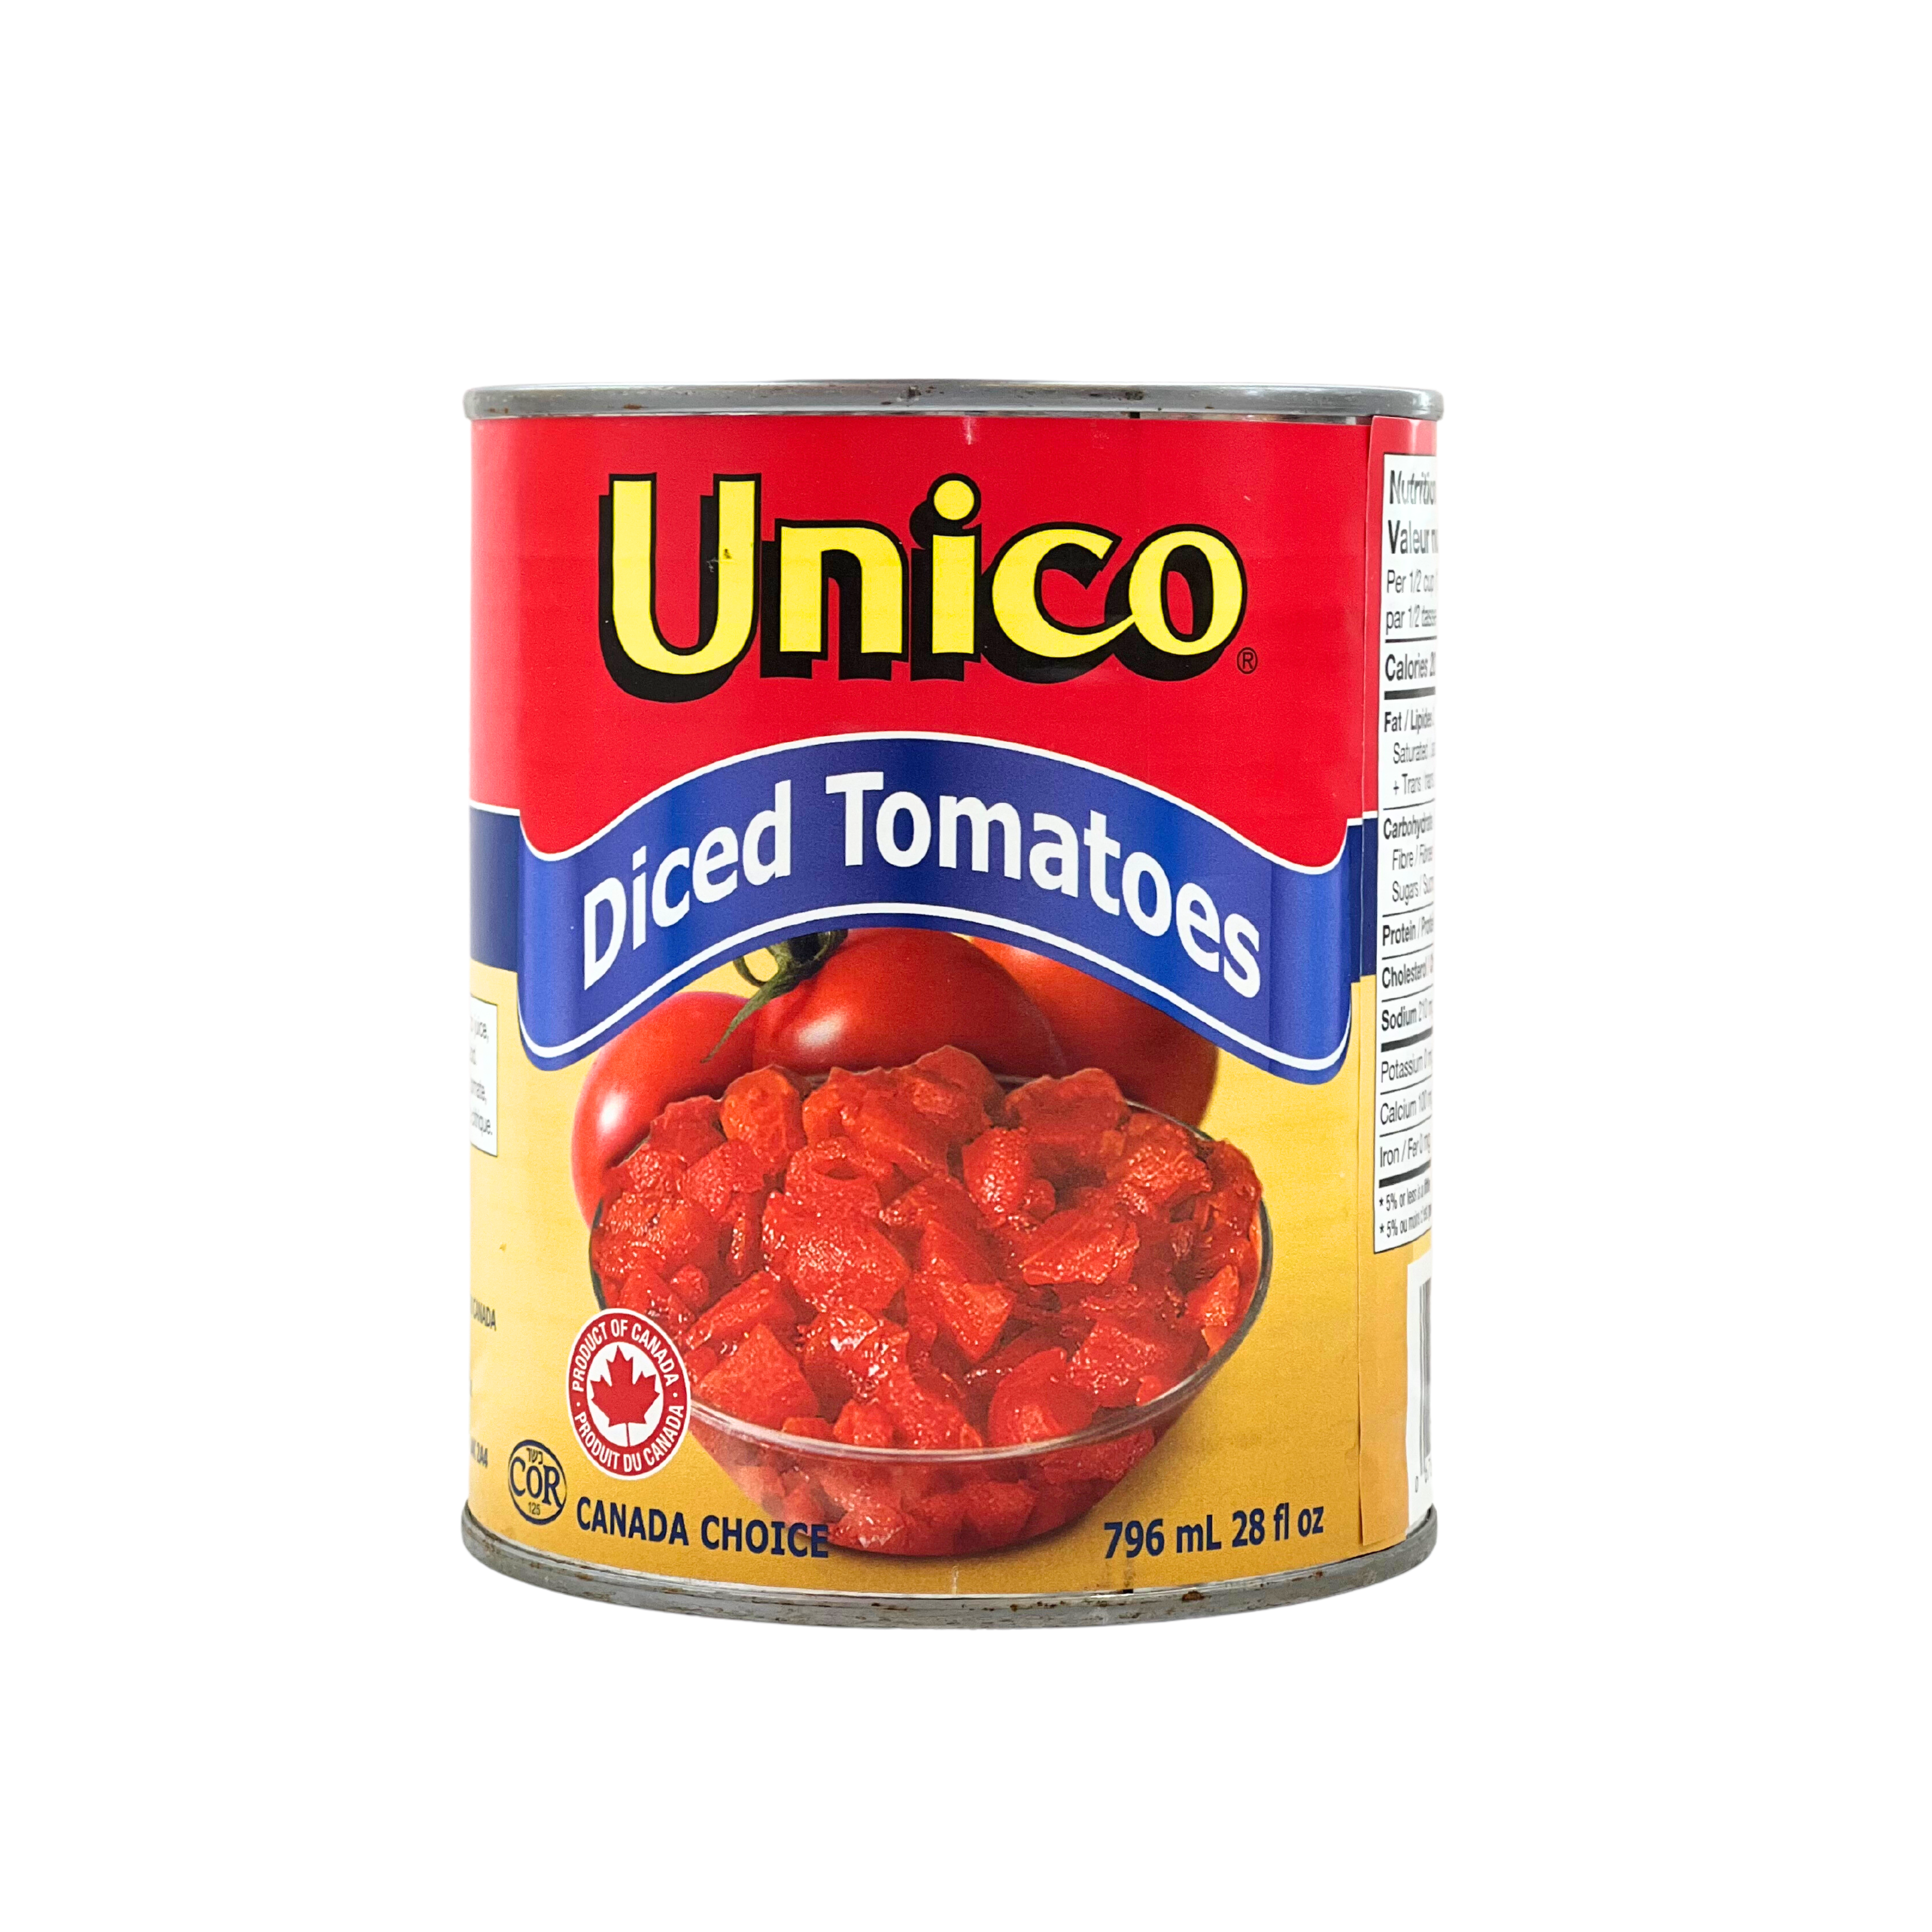 Unico Diced Tomato 796ml